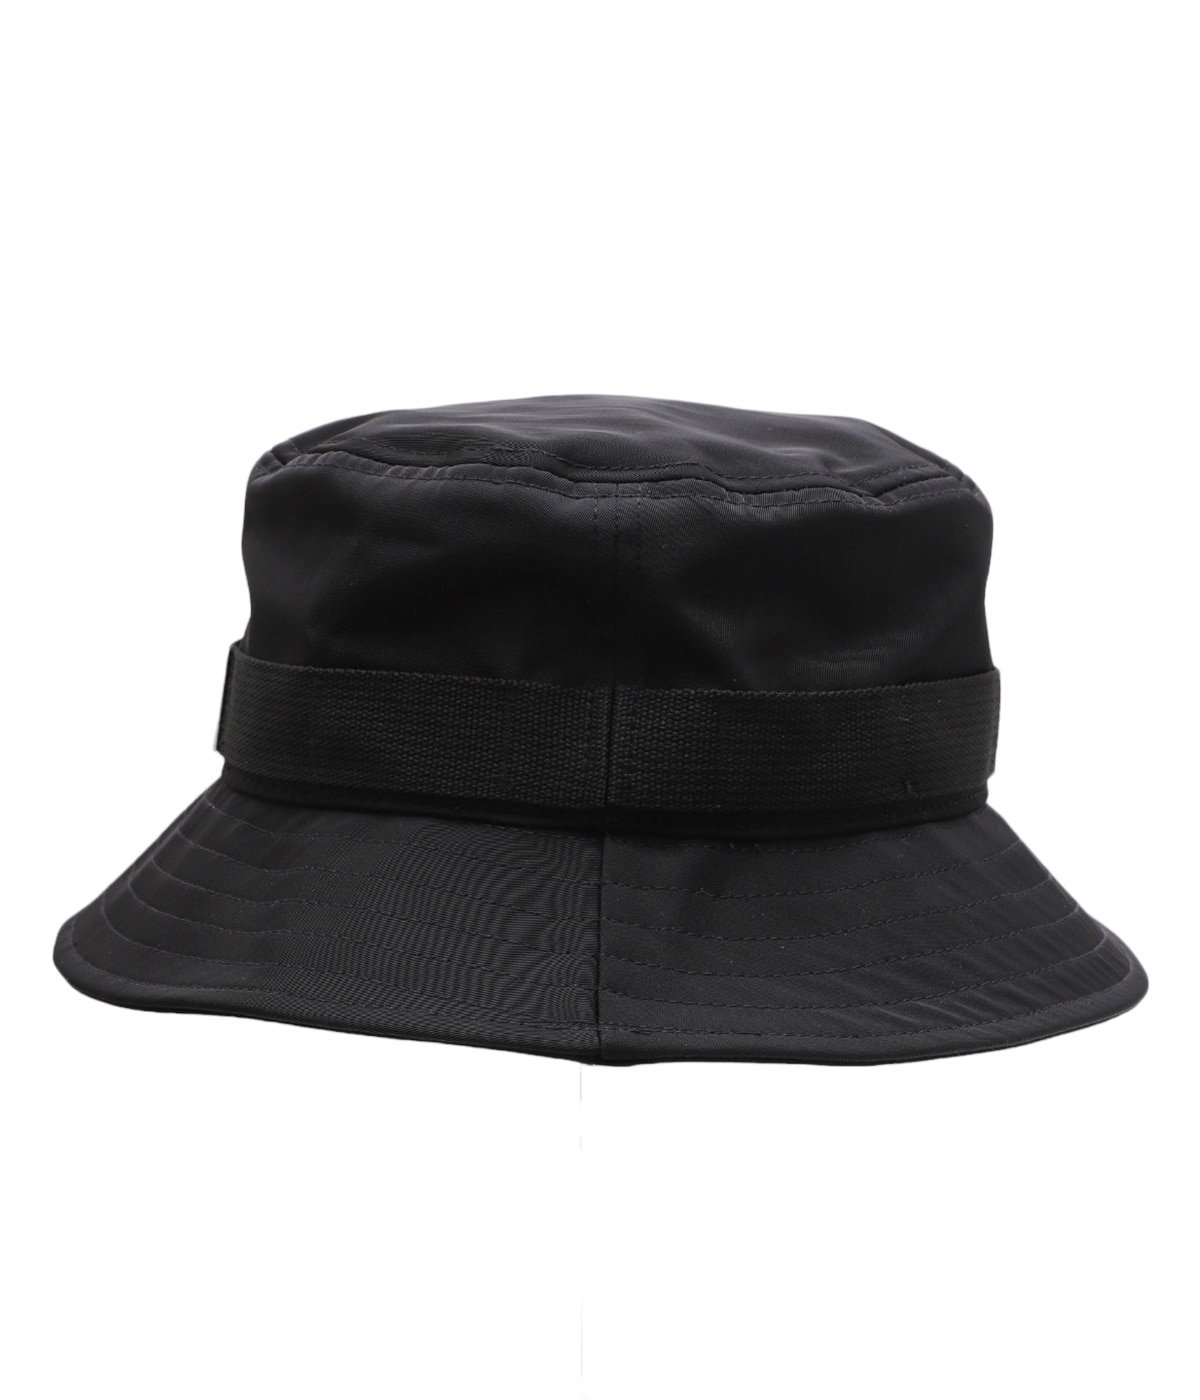 KENZO PARIS LOGO CREST 4 BUCKET HAT | KENZO(ケンゾー) / 帽子